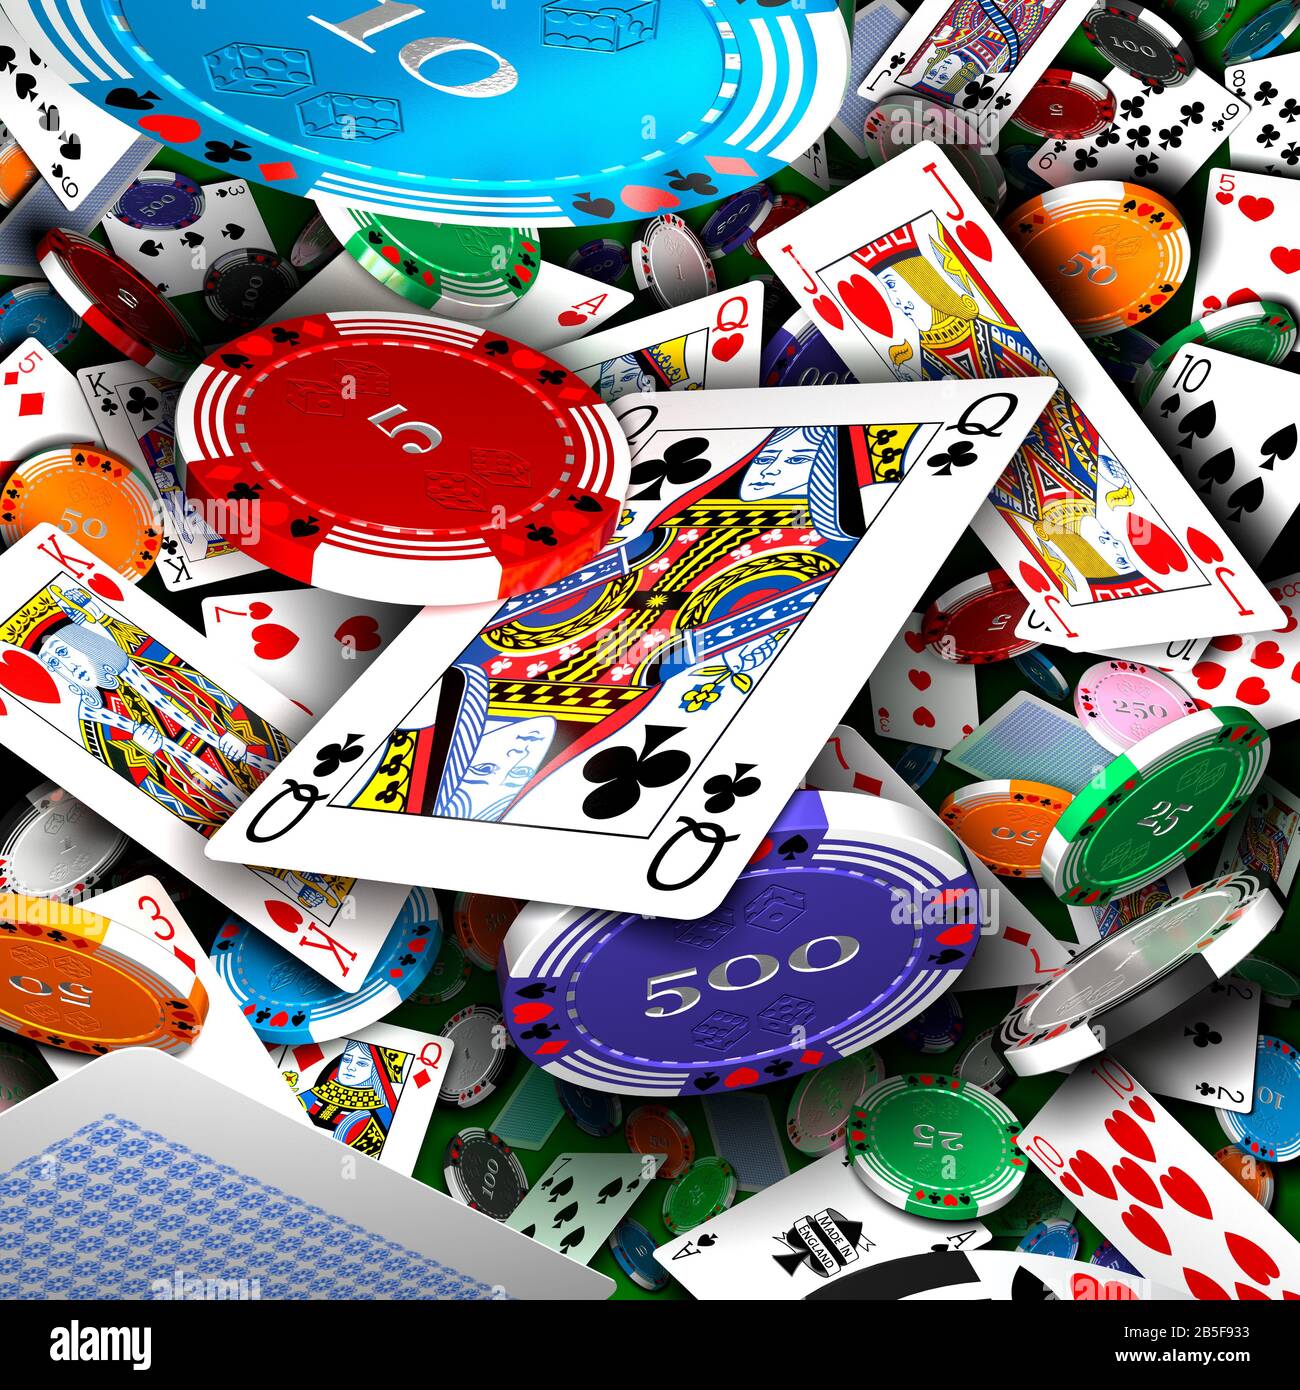 Playing card, cards, gambling chips, chance, luck, casino, falling. Stock Photo